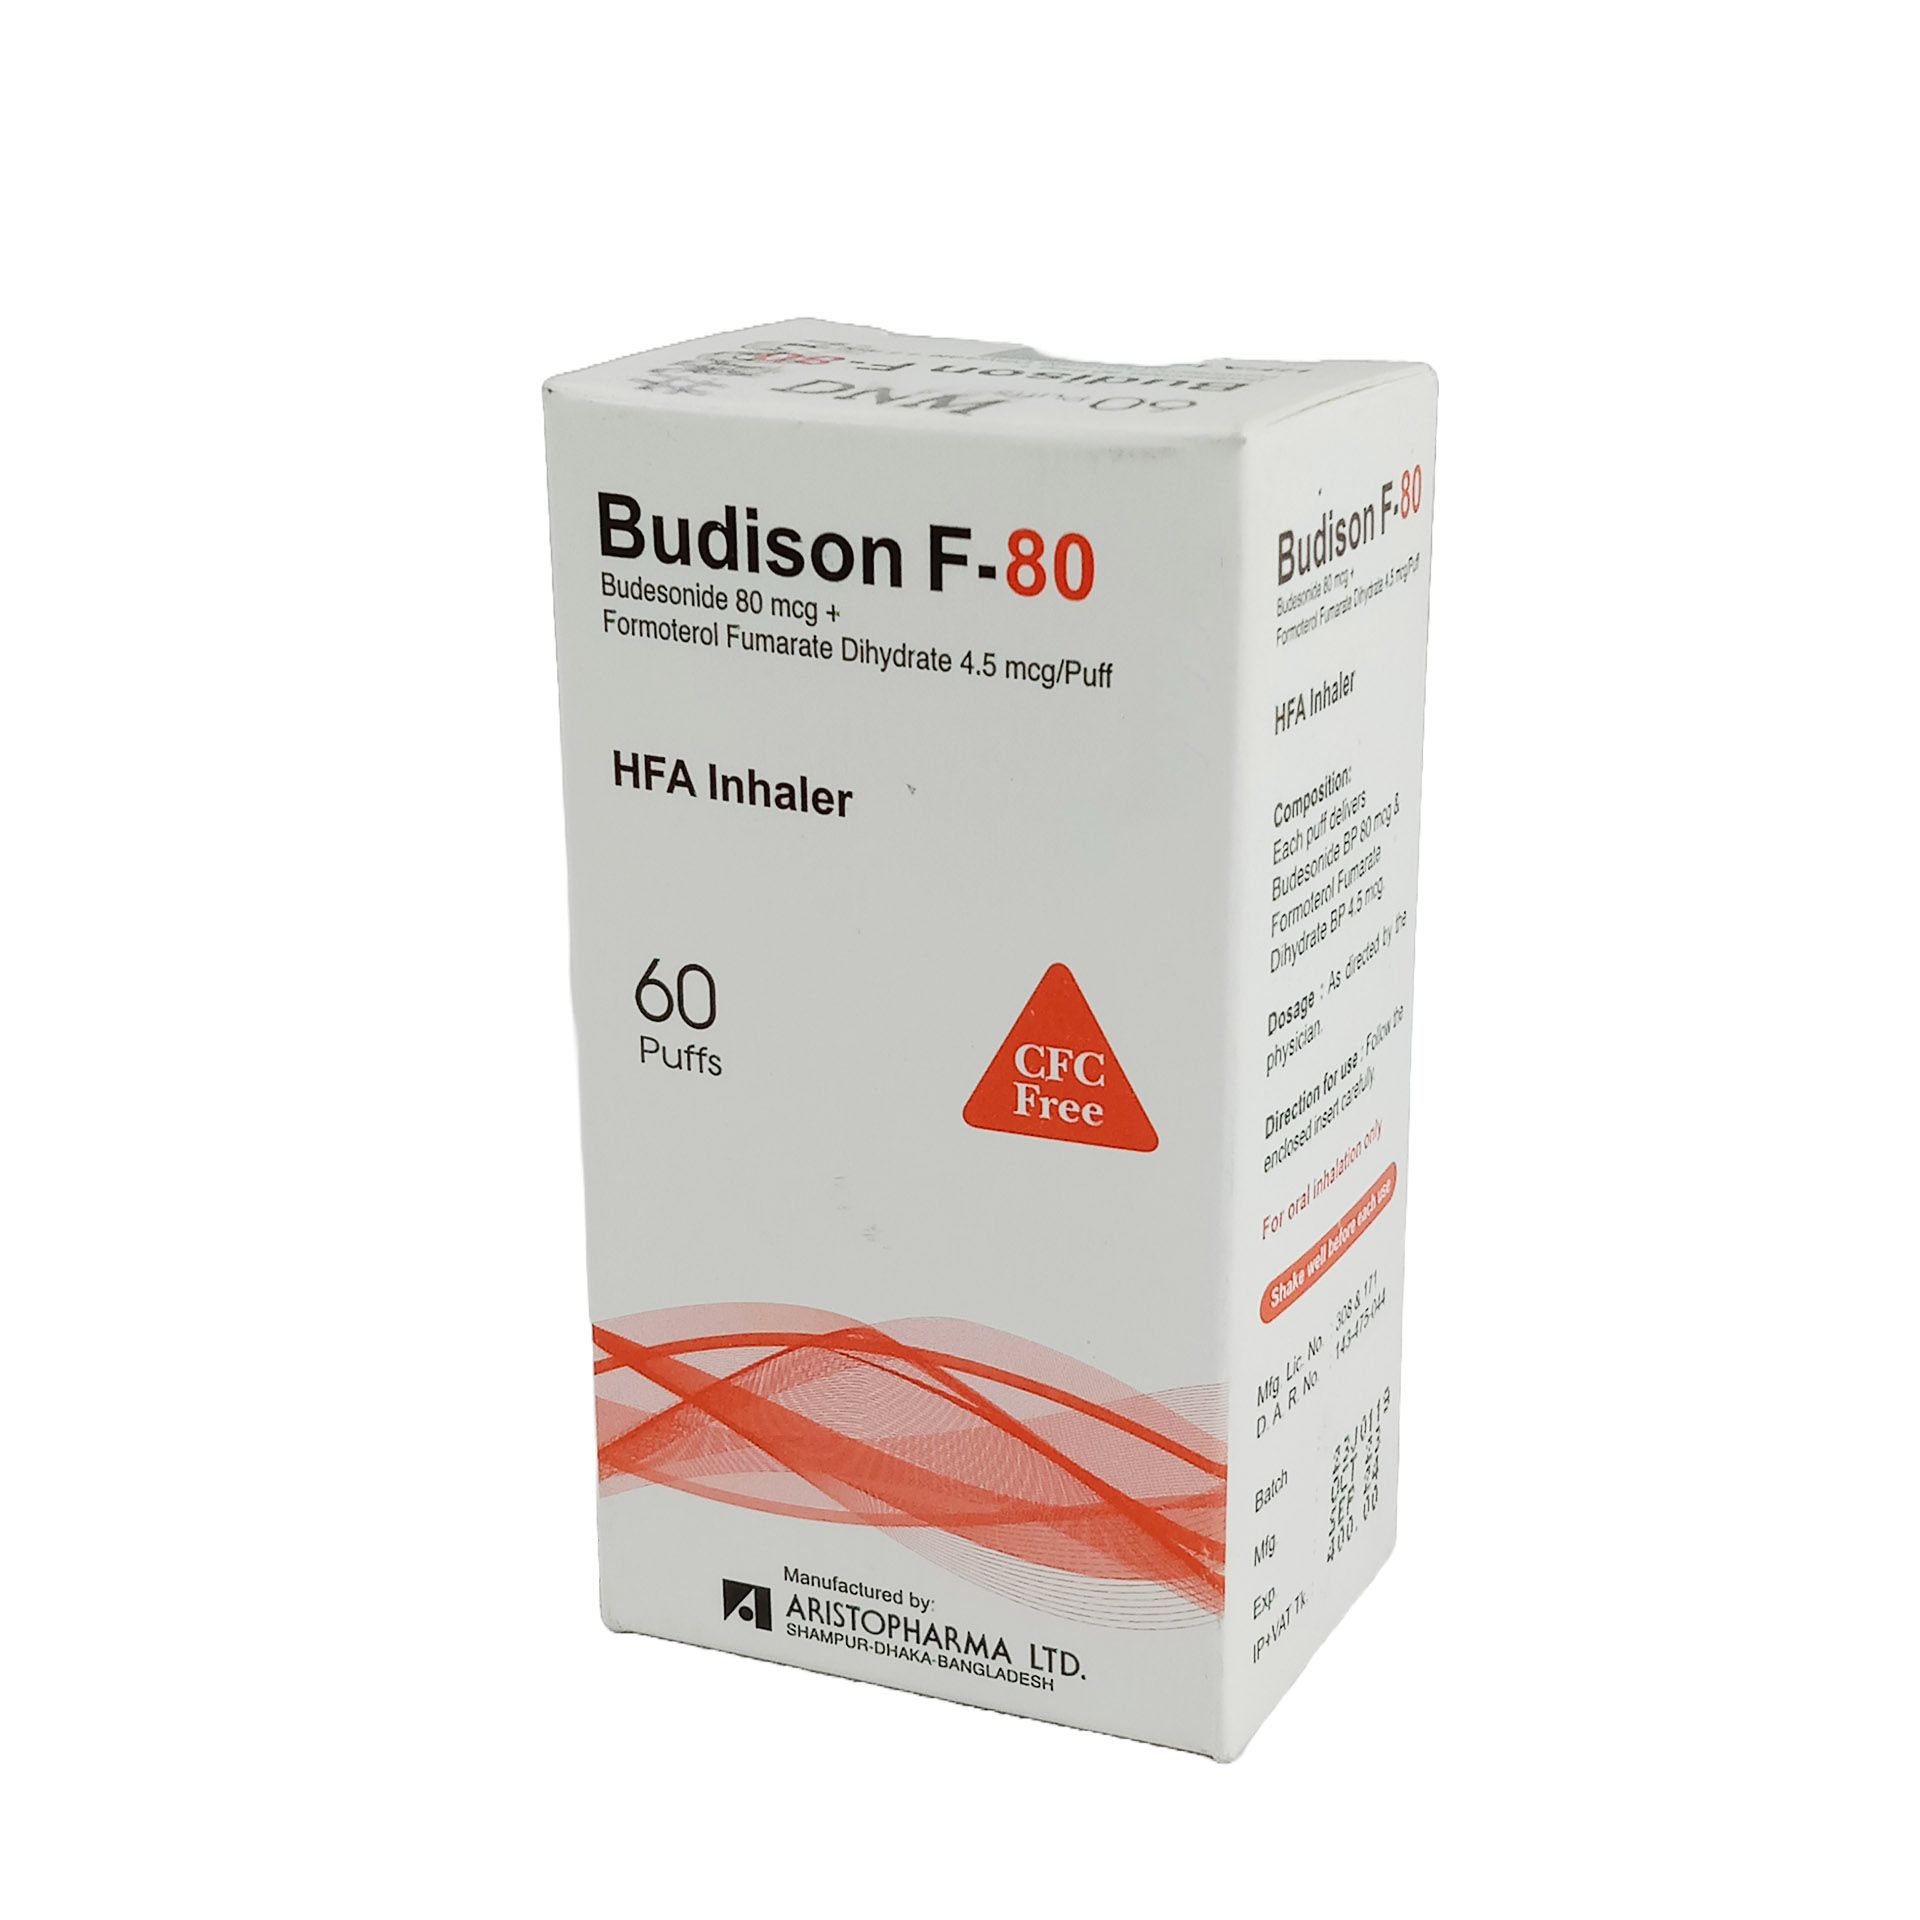 Budison F 80 80mcg+4.5mcg/Puff Inhaler